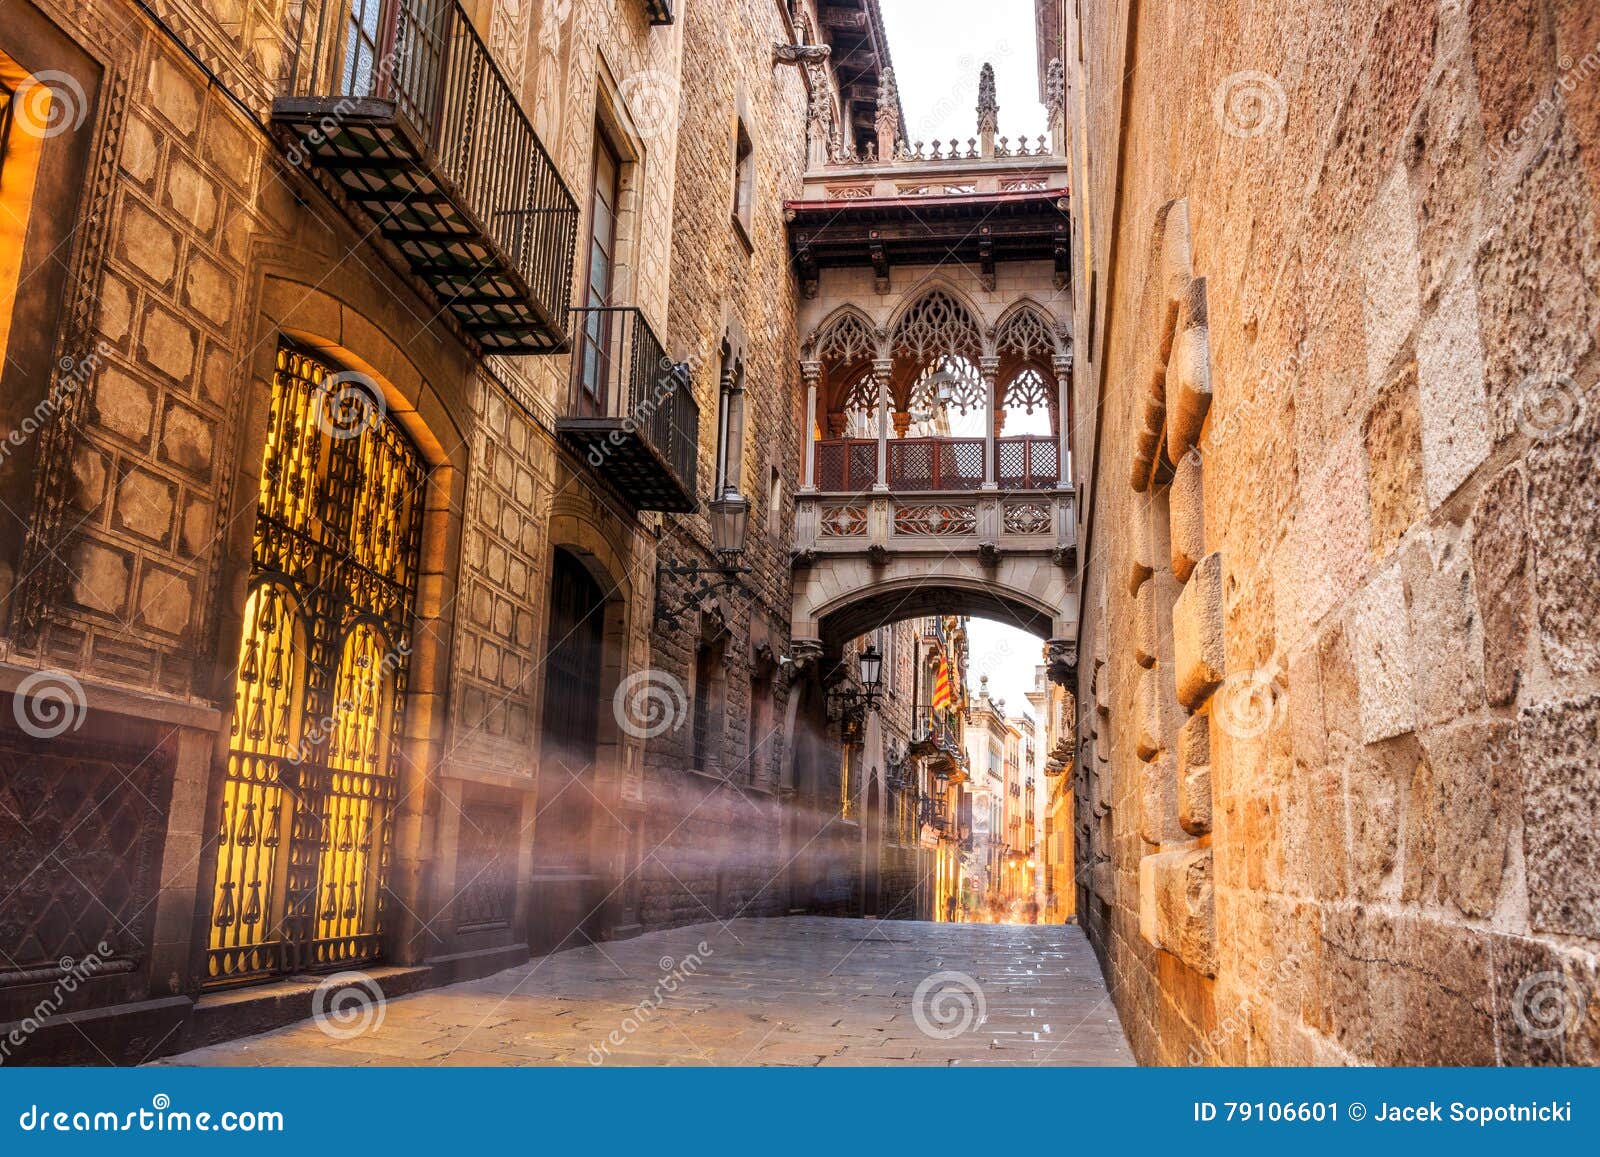 barri gotic quarter of barcelona, spain